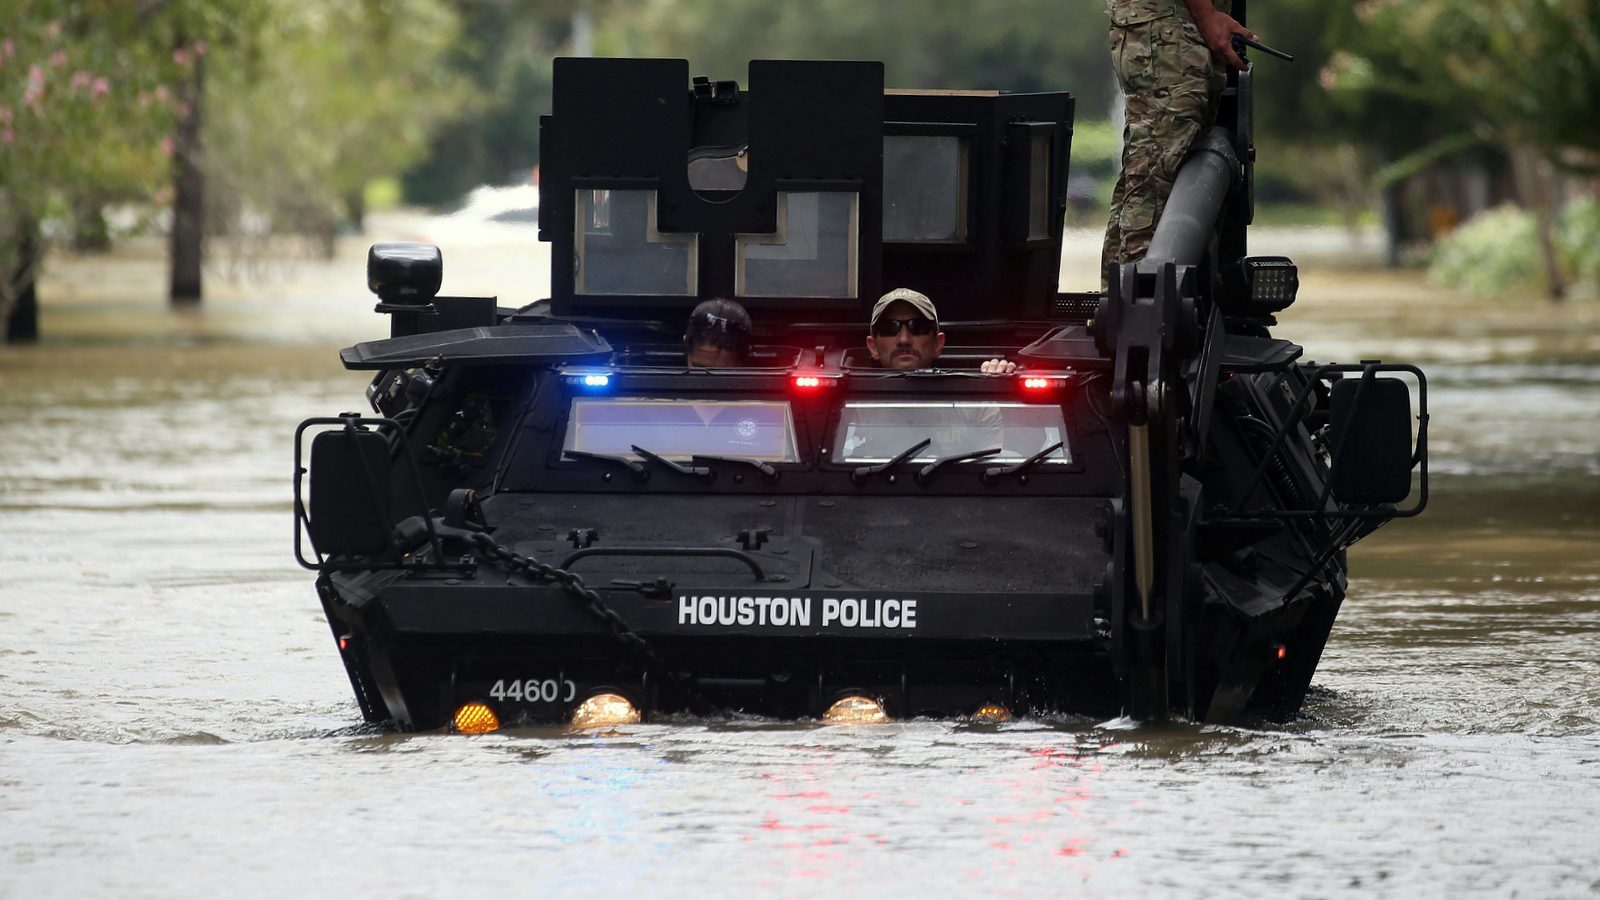 Houston Police vehicle